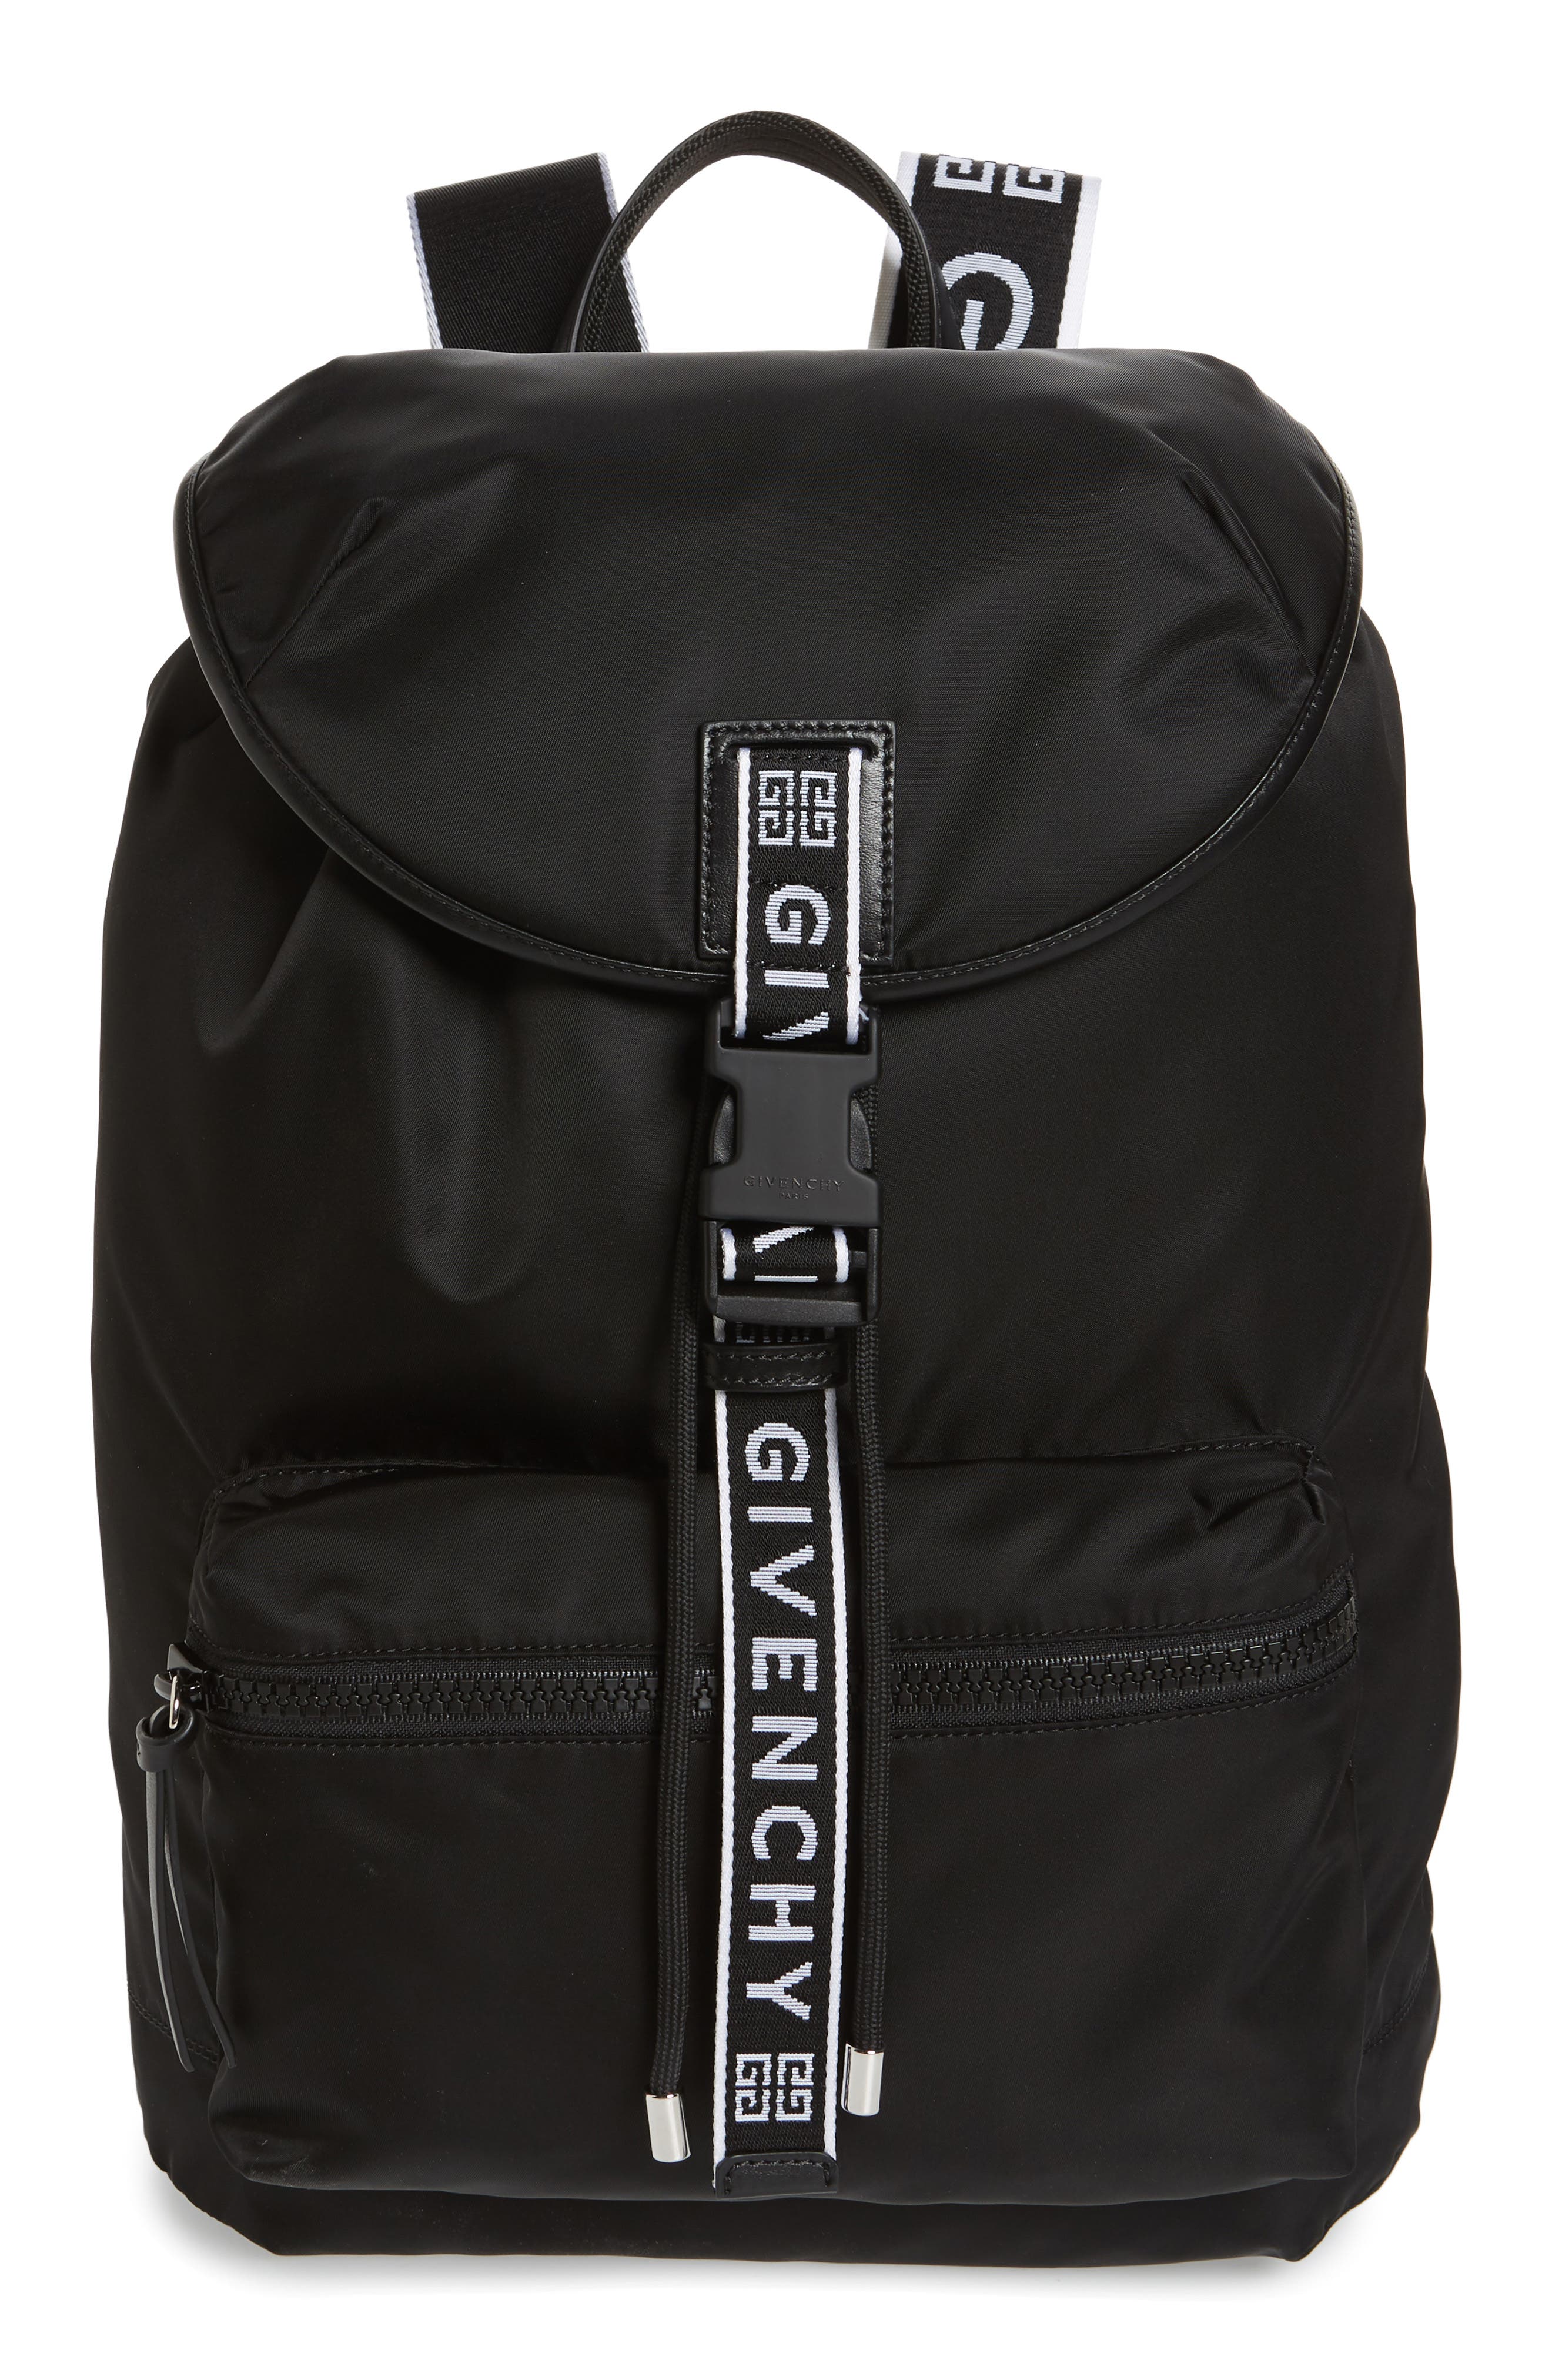 Givenchy Light 3 Black Nylon Backpack 